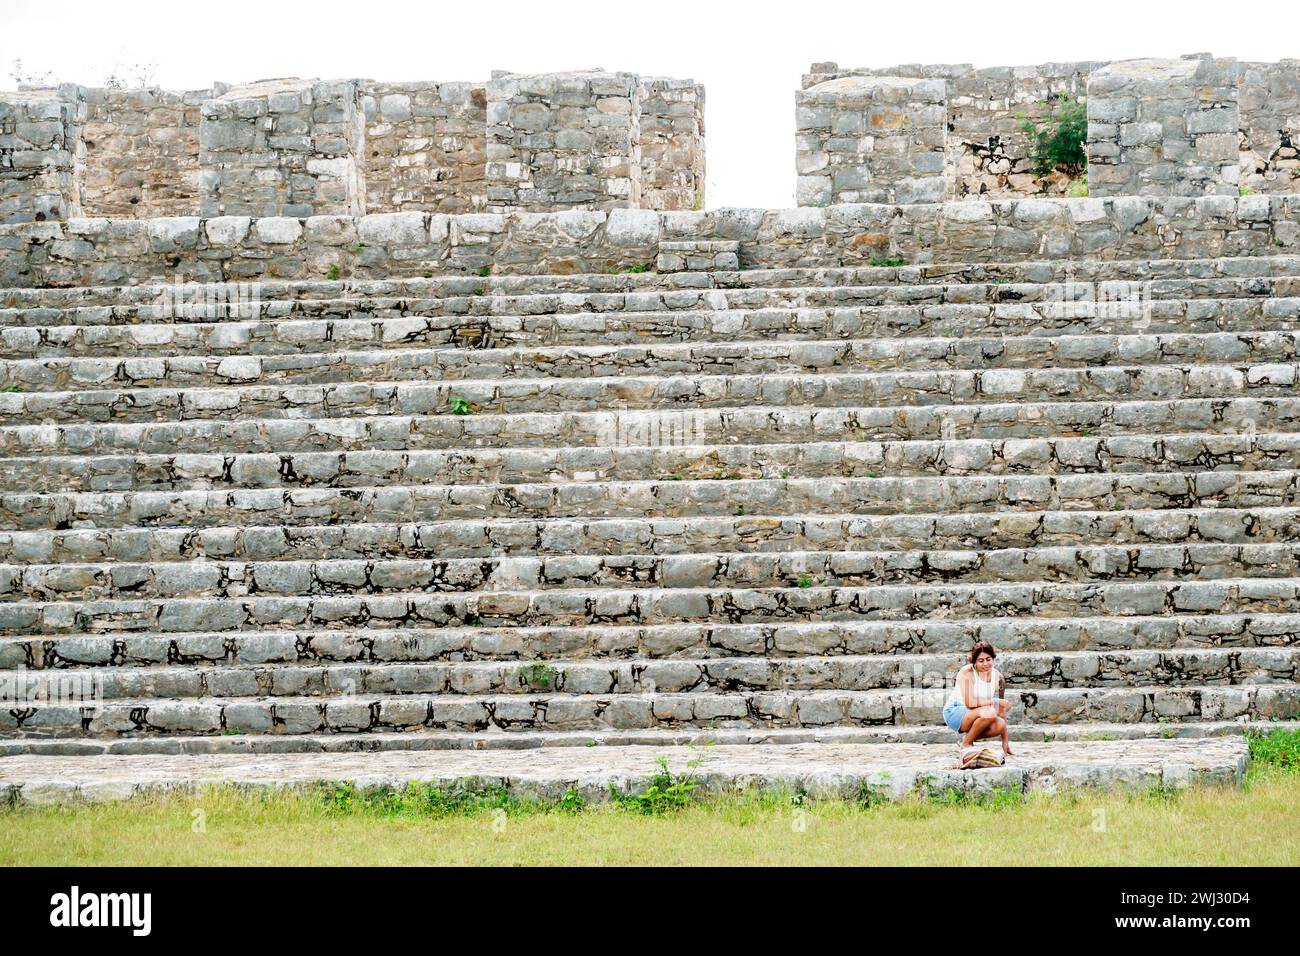 Merida Mexico,Dzibilchaltun Archaeological Zone site National Park,Mayan civilization city ruins,Zona Arqueologica de Dzibilchaltun,structure 44 rock Stock Photo